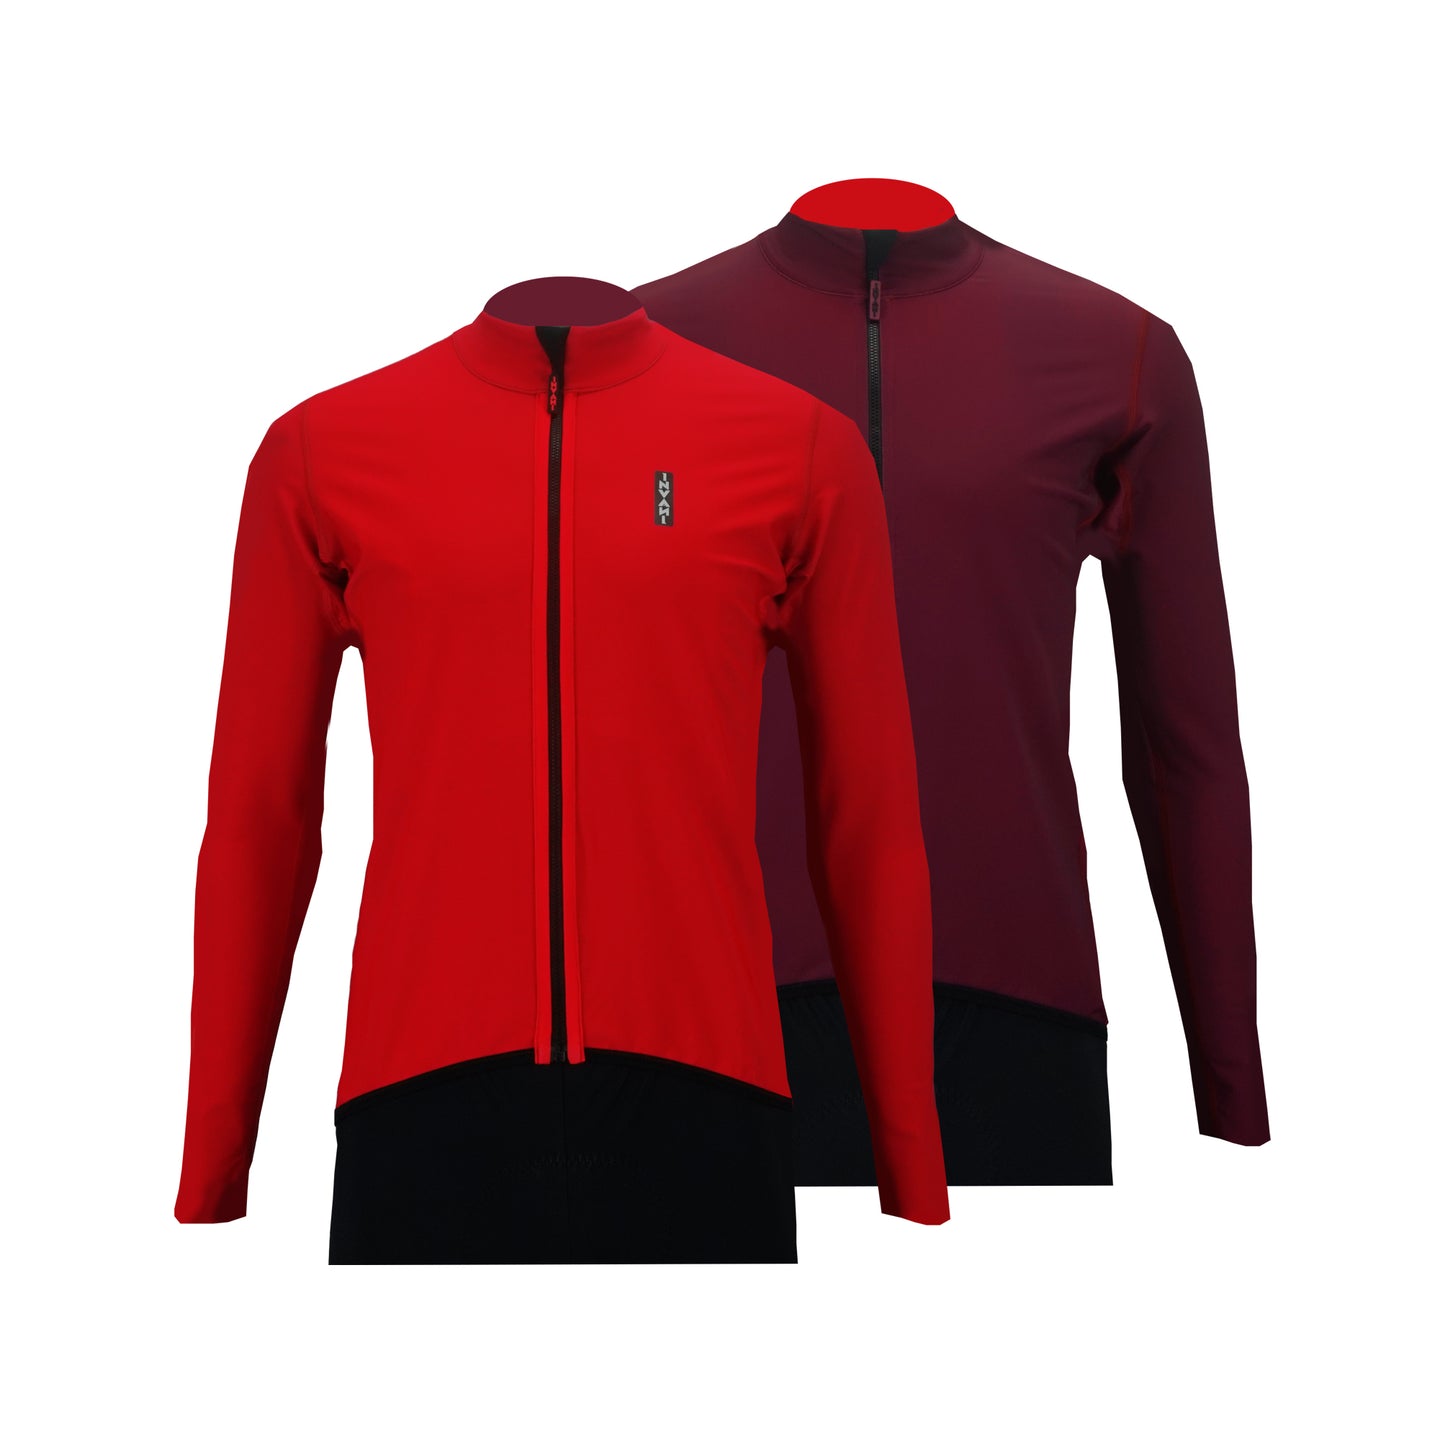 Reversible Long Sleeve Jersey: Red / Burgundy (Men's)